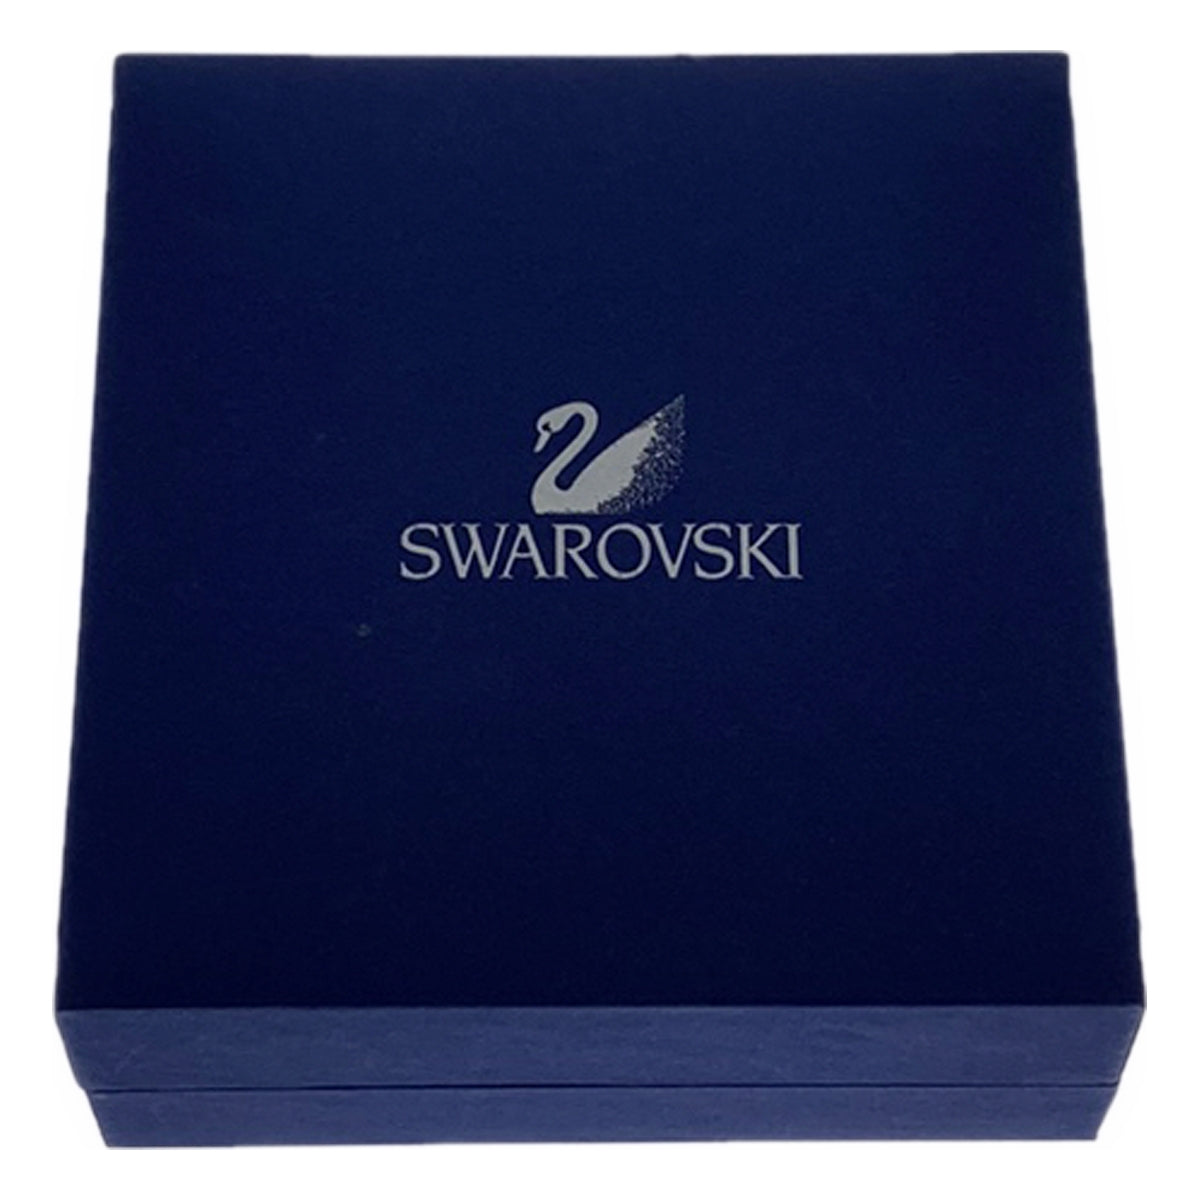 SWAROVSKI / スワロフスキー | クリスタル装飾 スタッドピアス 両耳用 | シルバー / パープル | レディース